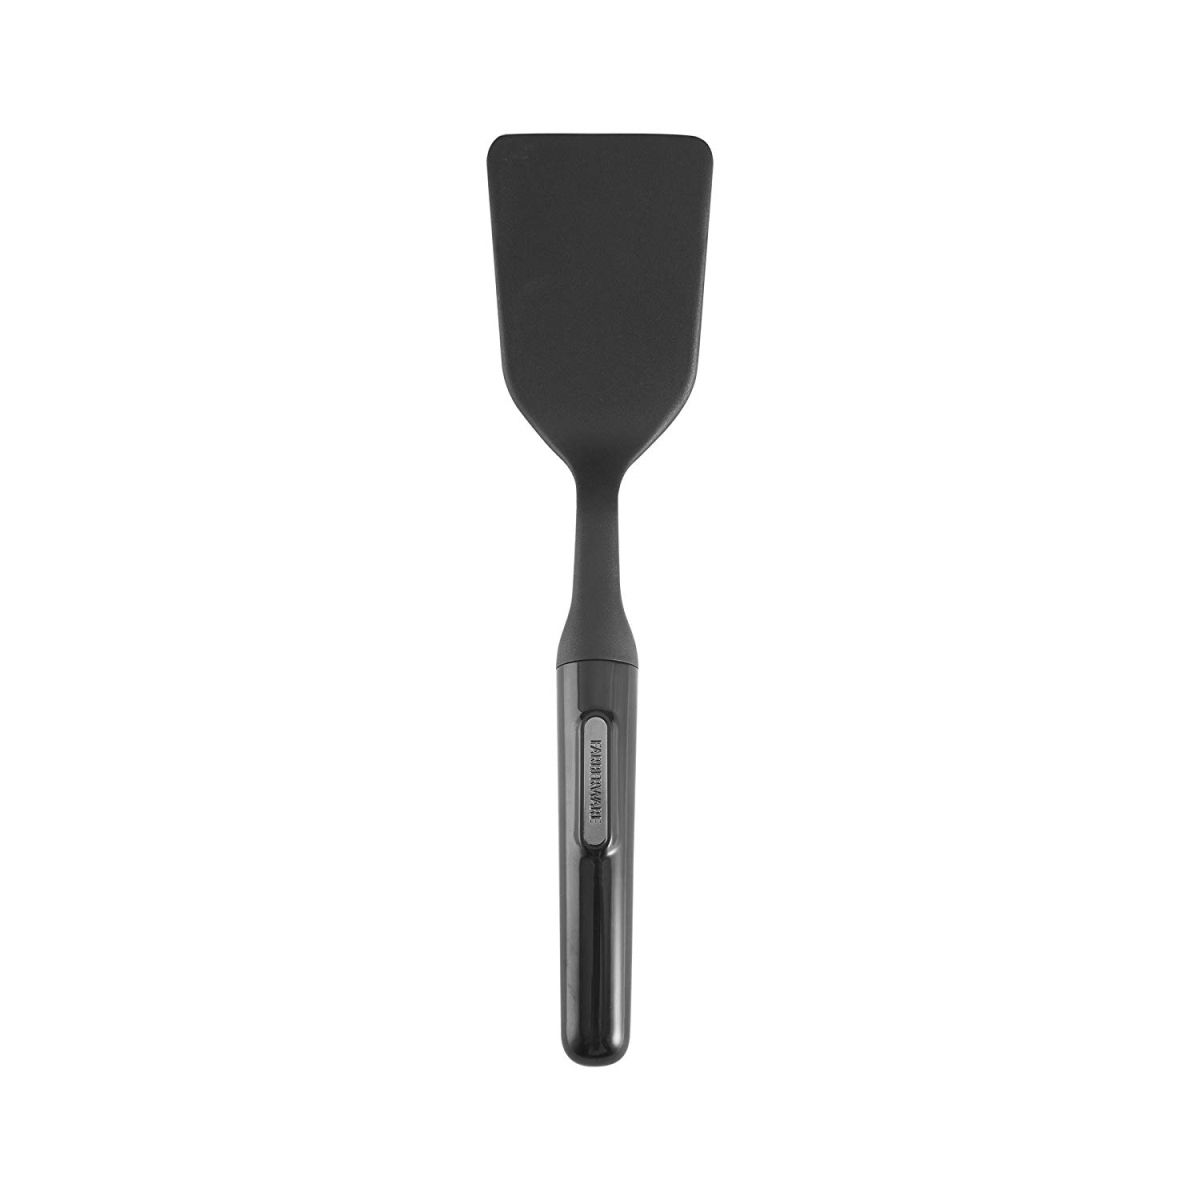 5211451 Blk Professional Short Turner-safe For Non-stick Cookware, Black - Pack Of 3